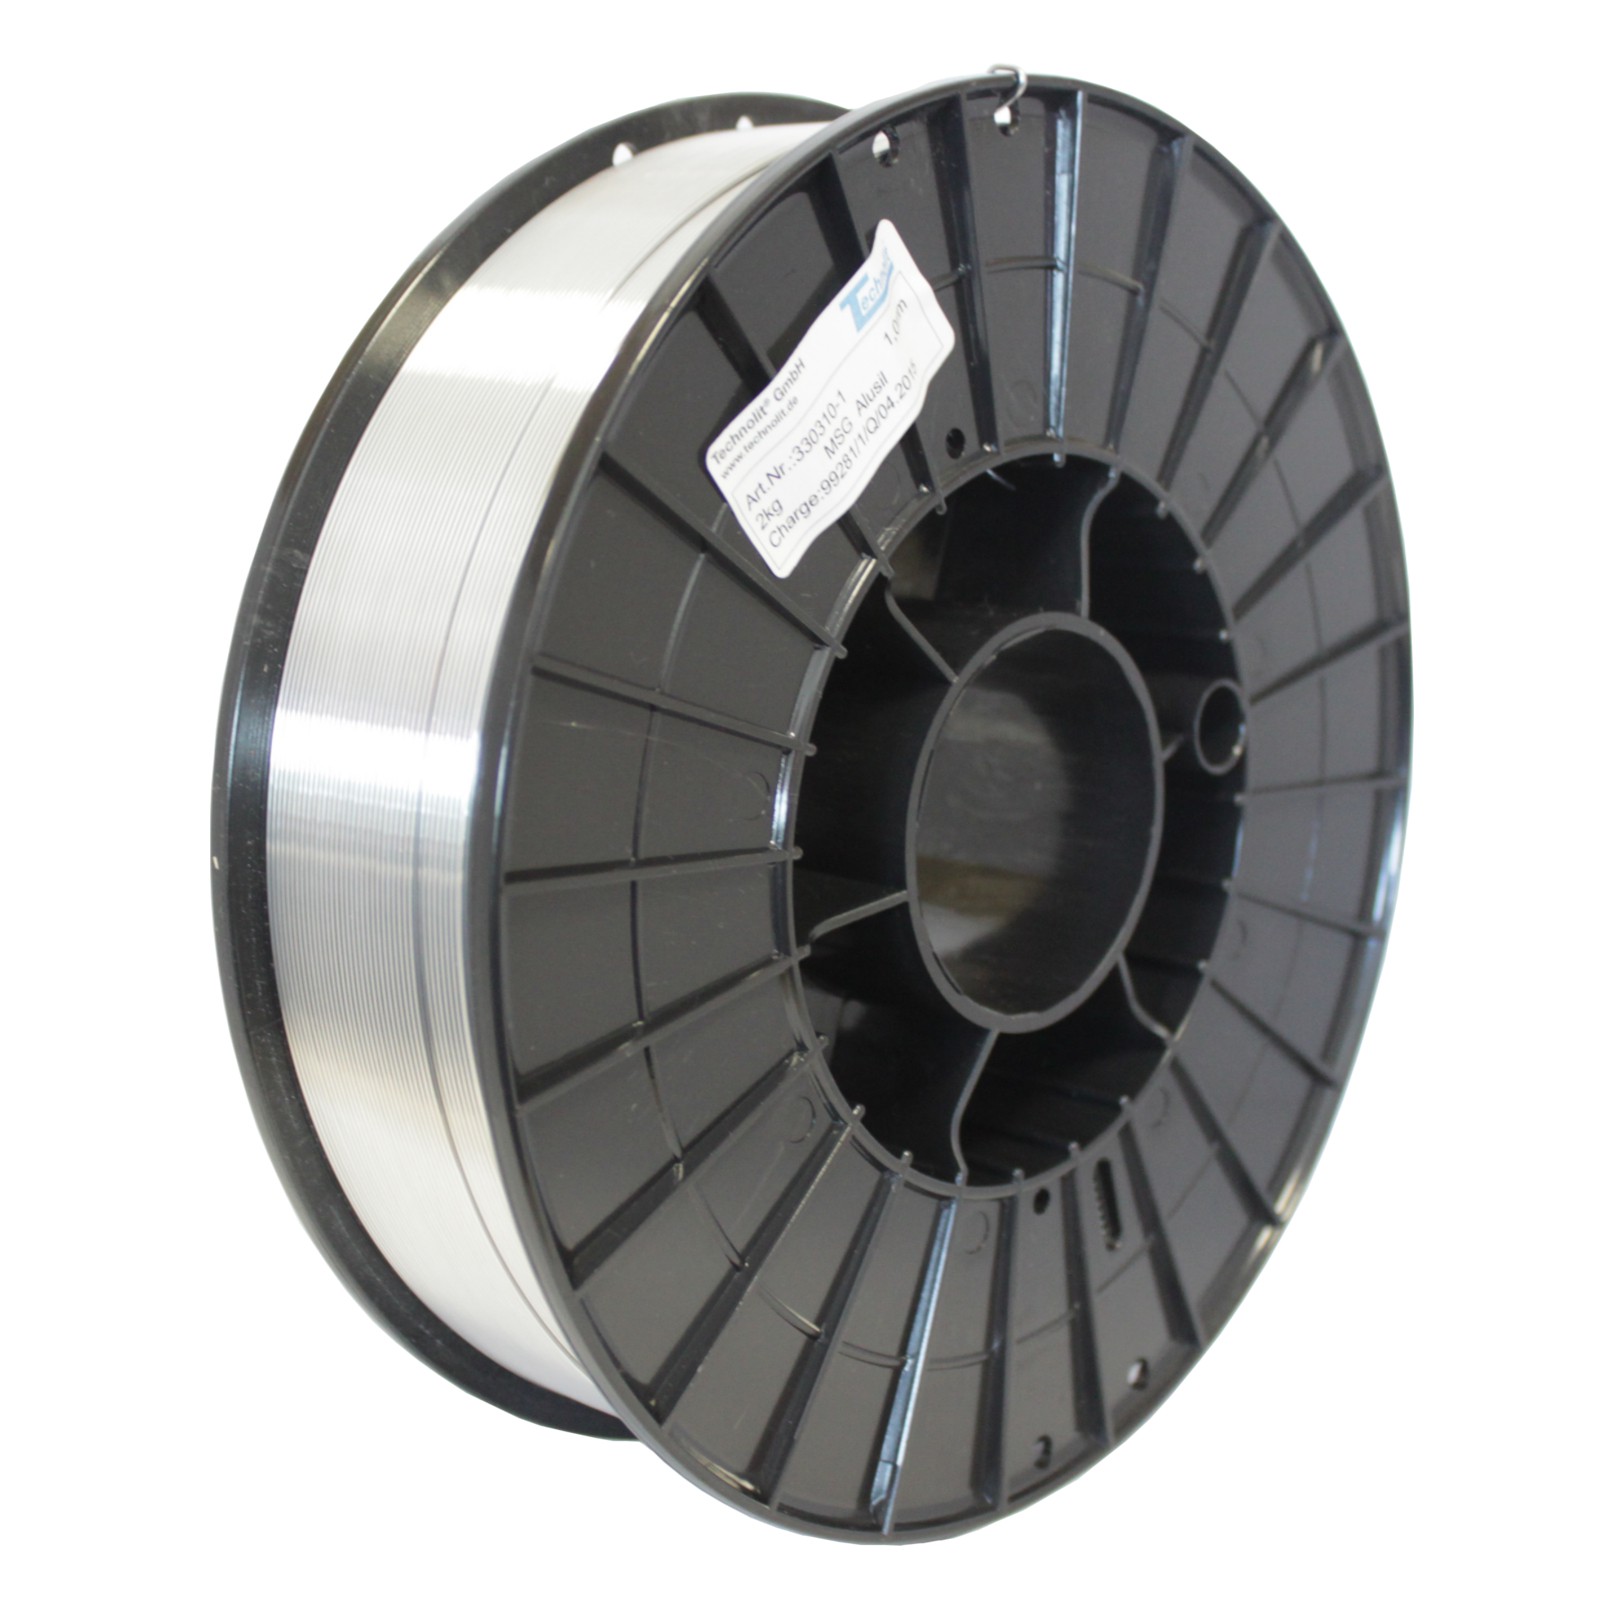 TECHNOLIT Schweißdraht MSG Alusil Aluminium Schweißdraht VPE 2kg diverse Größe Größe:1.0 mm von TECHNOLIT